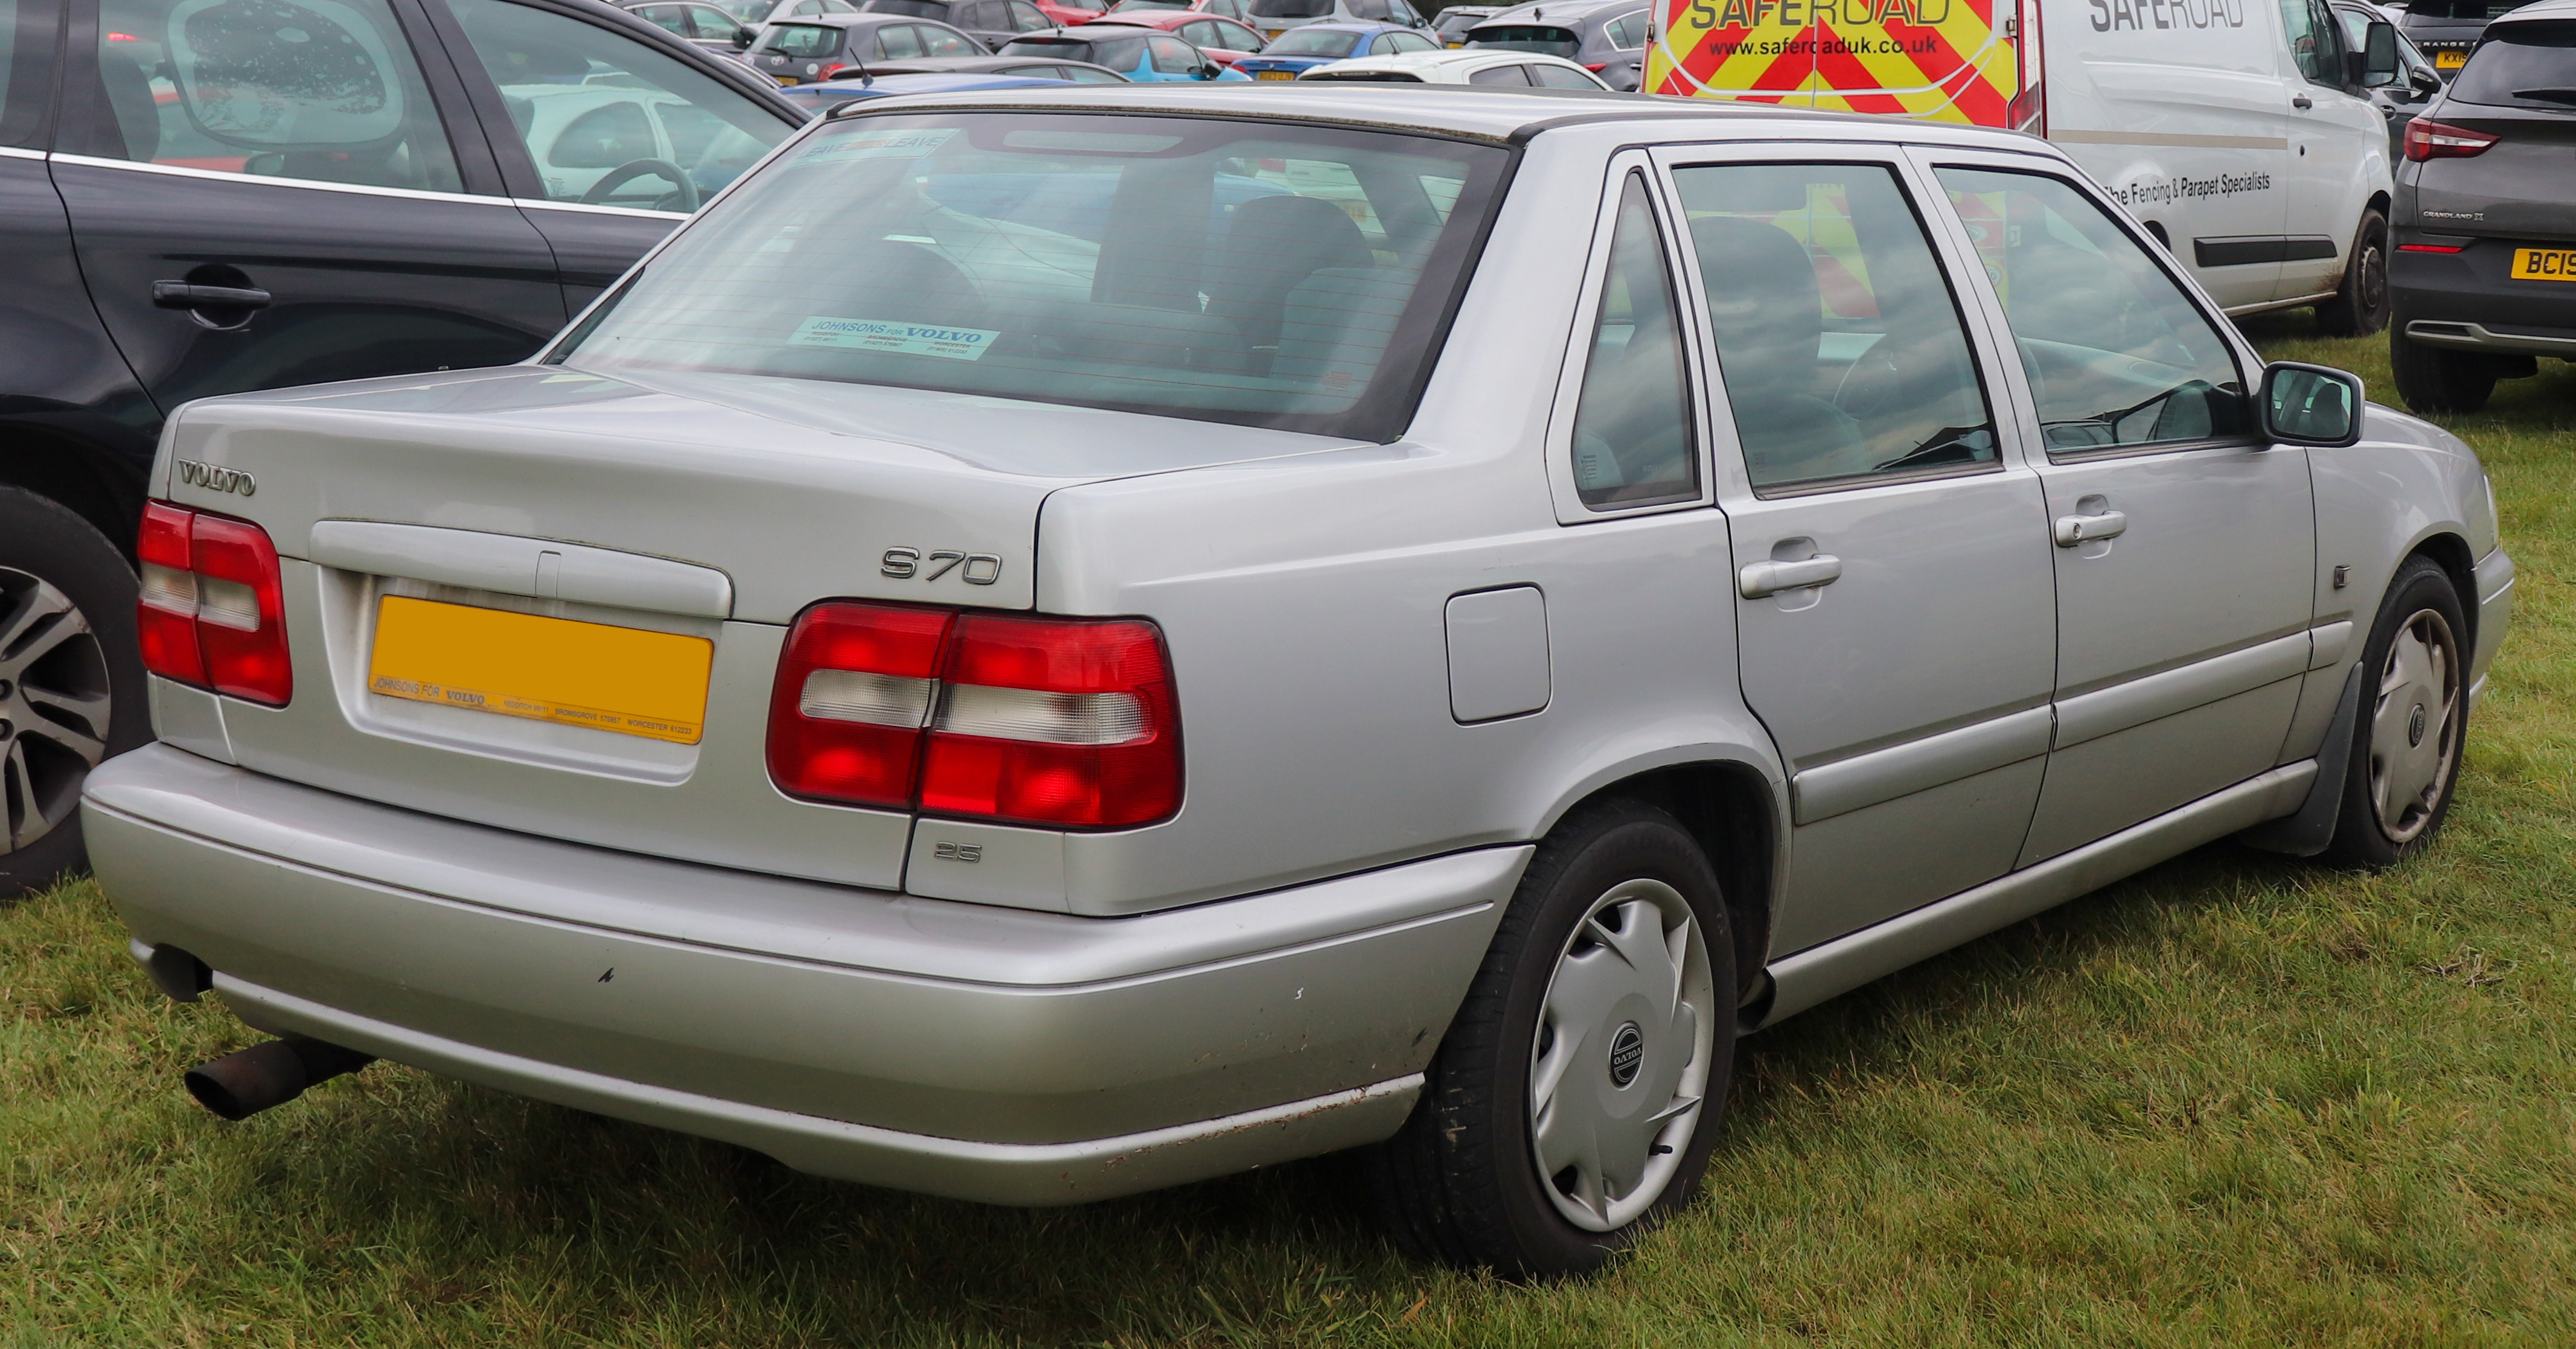 File:1999 Volvo S70 10V Automatic 2.4 Rear.jpg - Wikimedia Commons